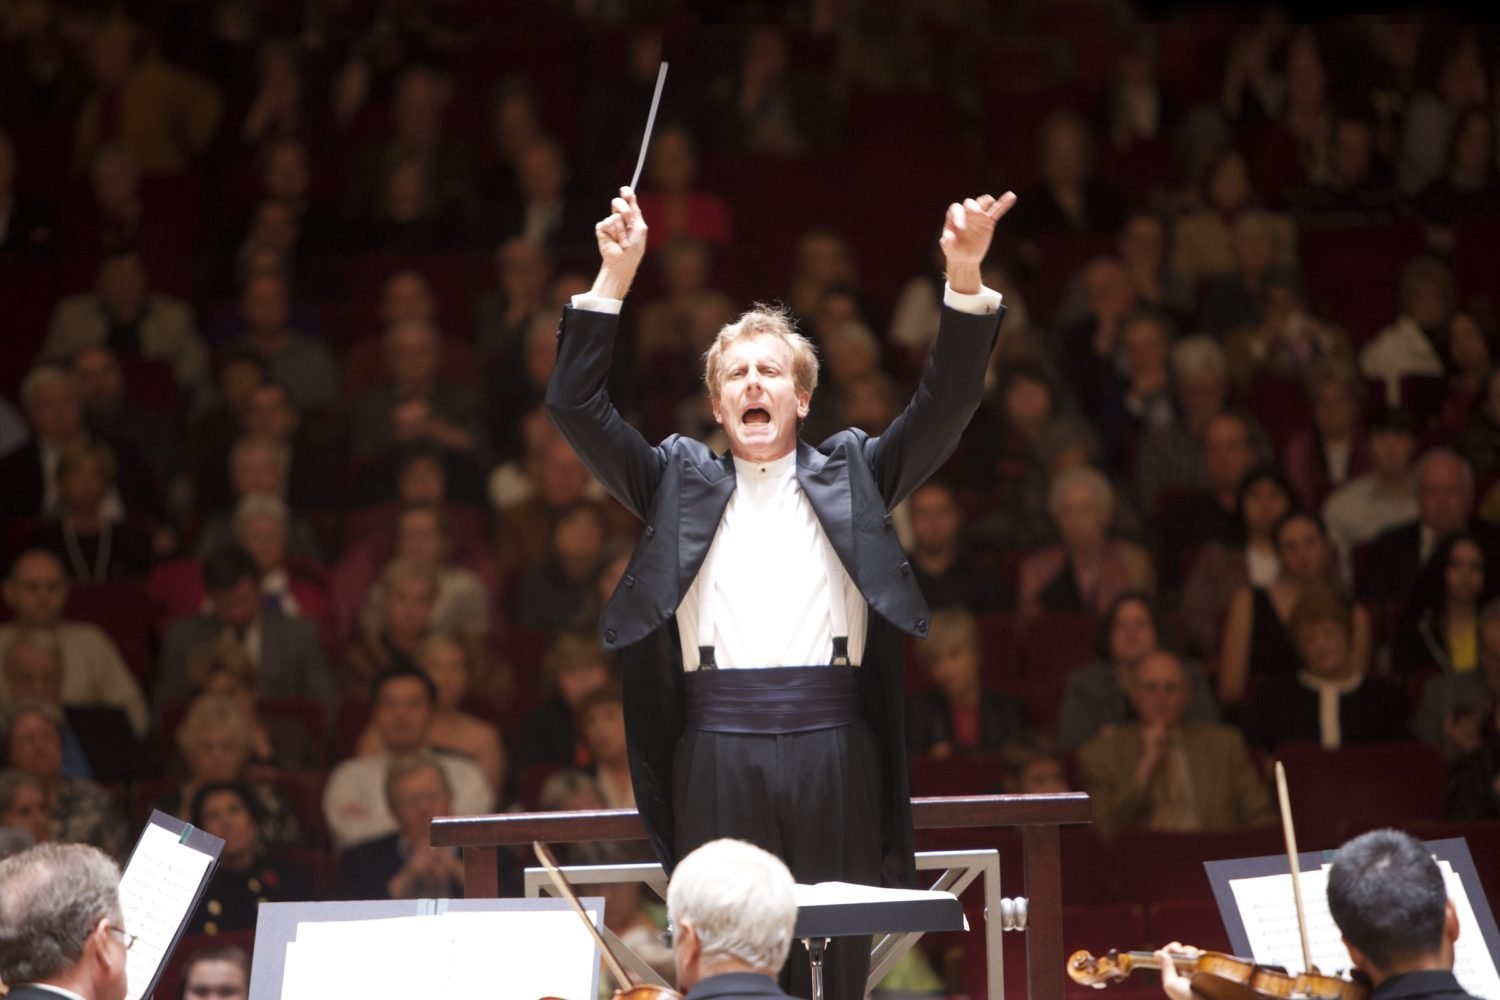 Hugh Wolff: Belgian National Orchestra